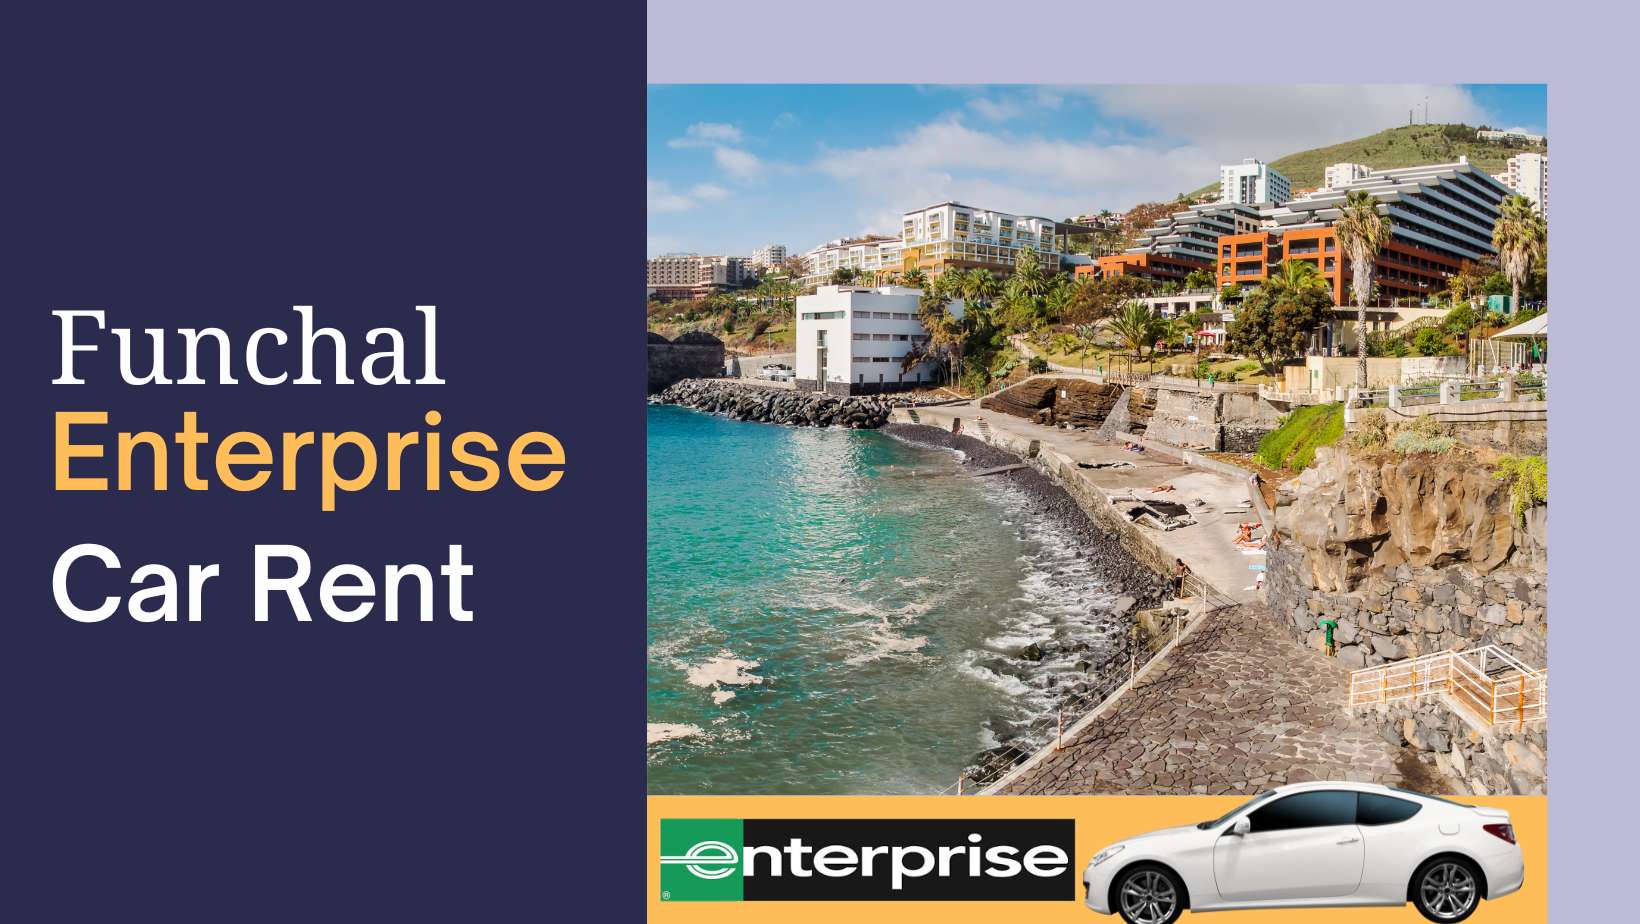 Enterprise Car Hire in Funchal